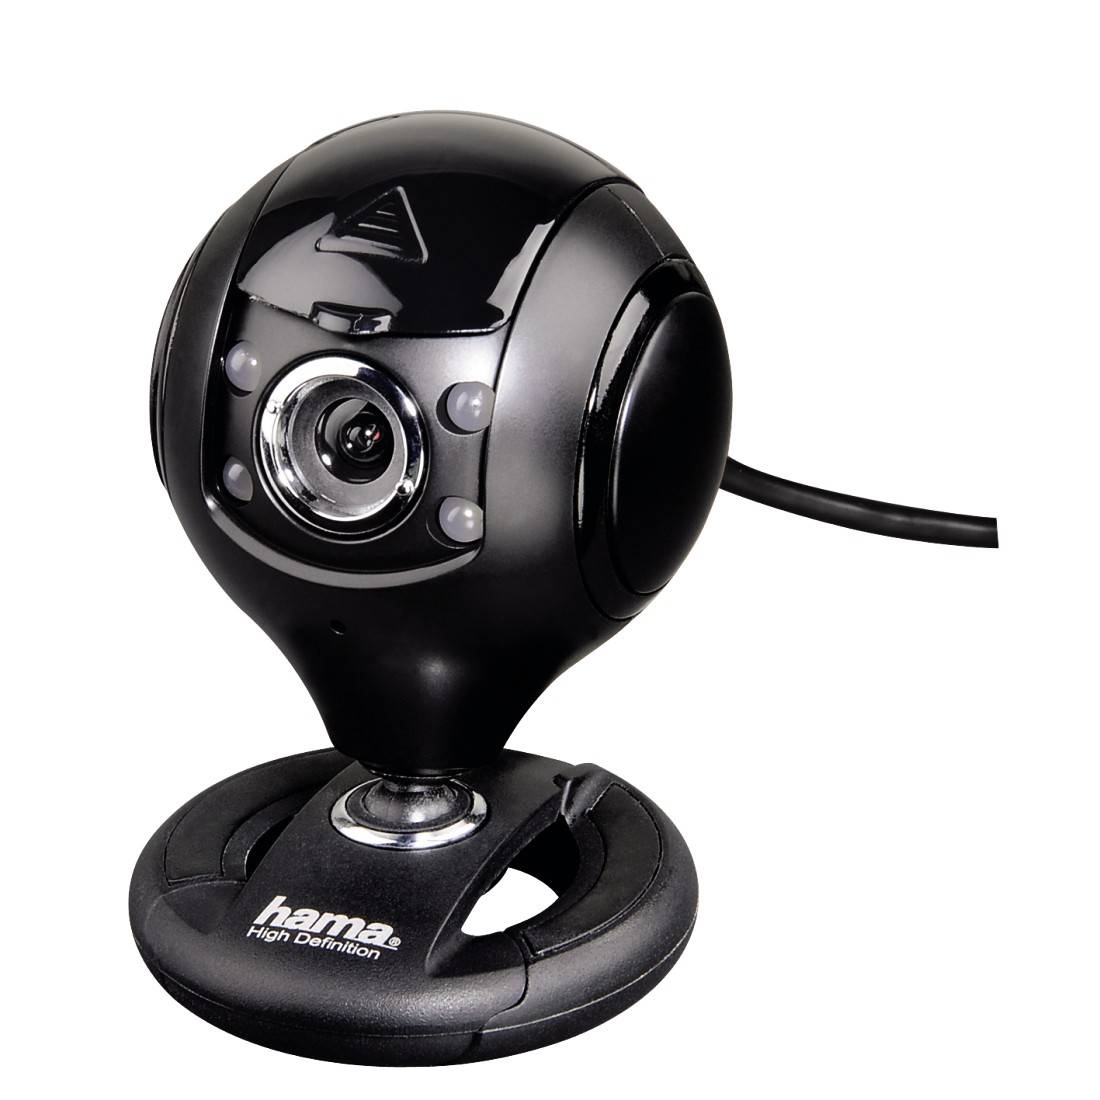 HD-Webcam Spy Protect